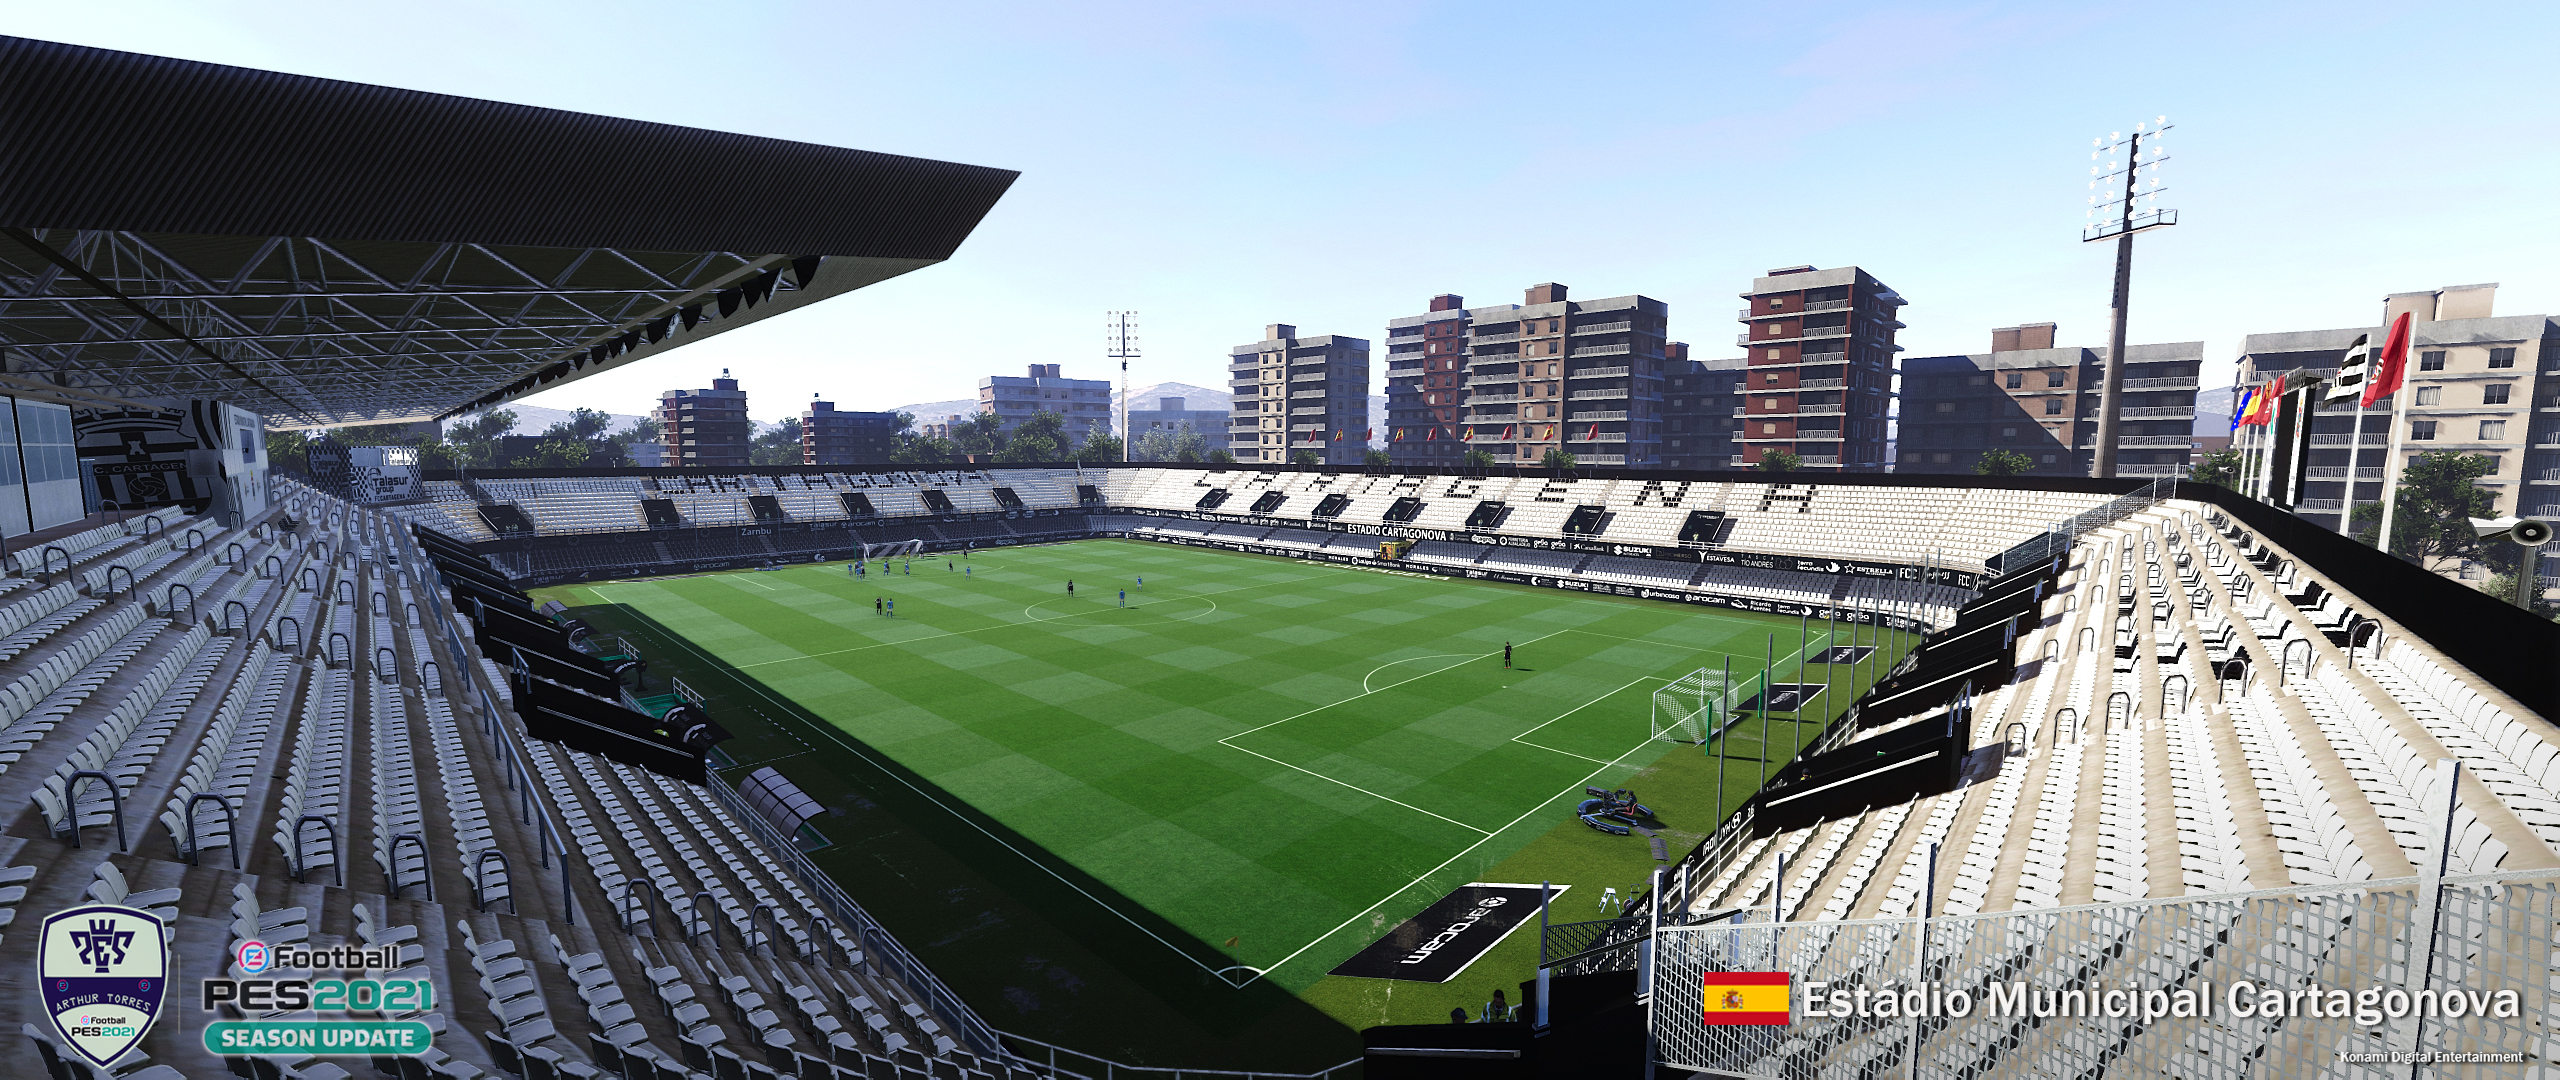 PES 2021 Stadiums (FC Cartagena) Estádio Municipal Cartagonova​ by Arthur Torres